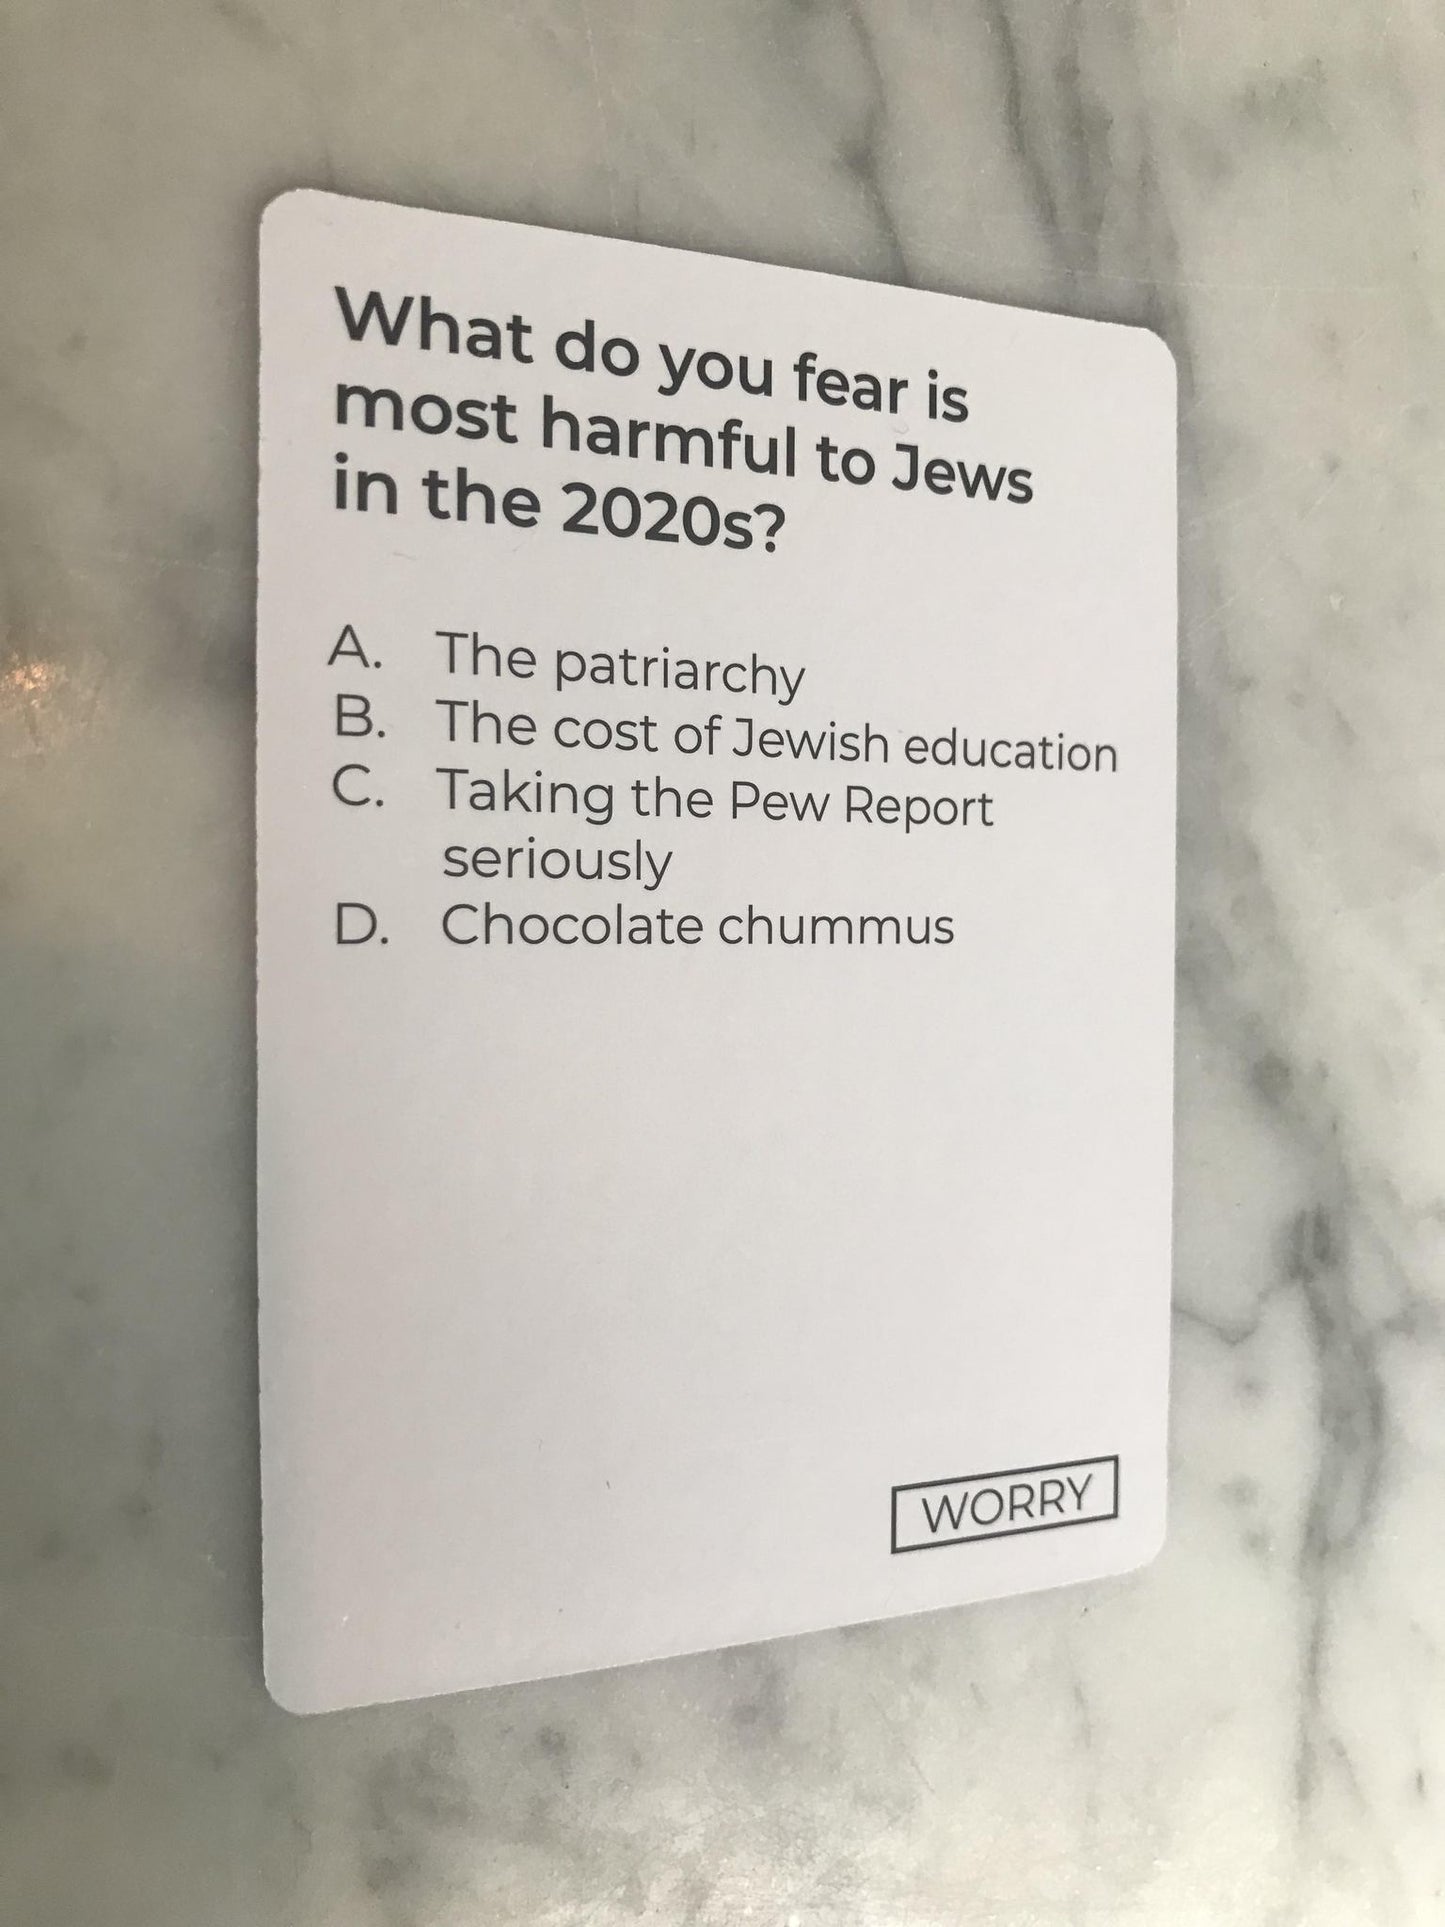 Jewish Card Revoked